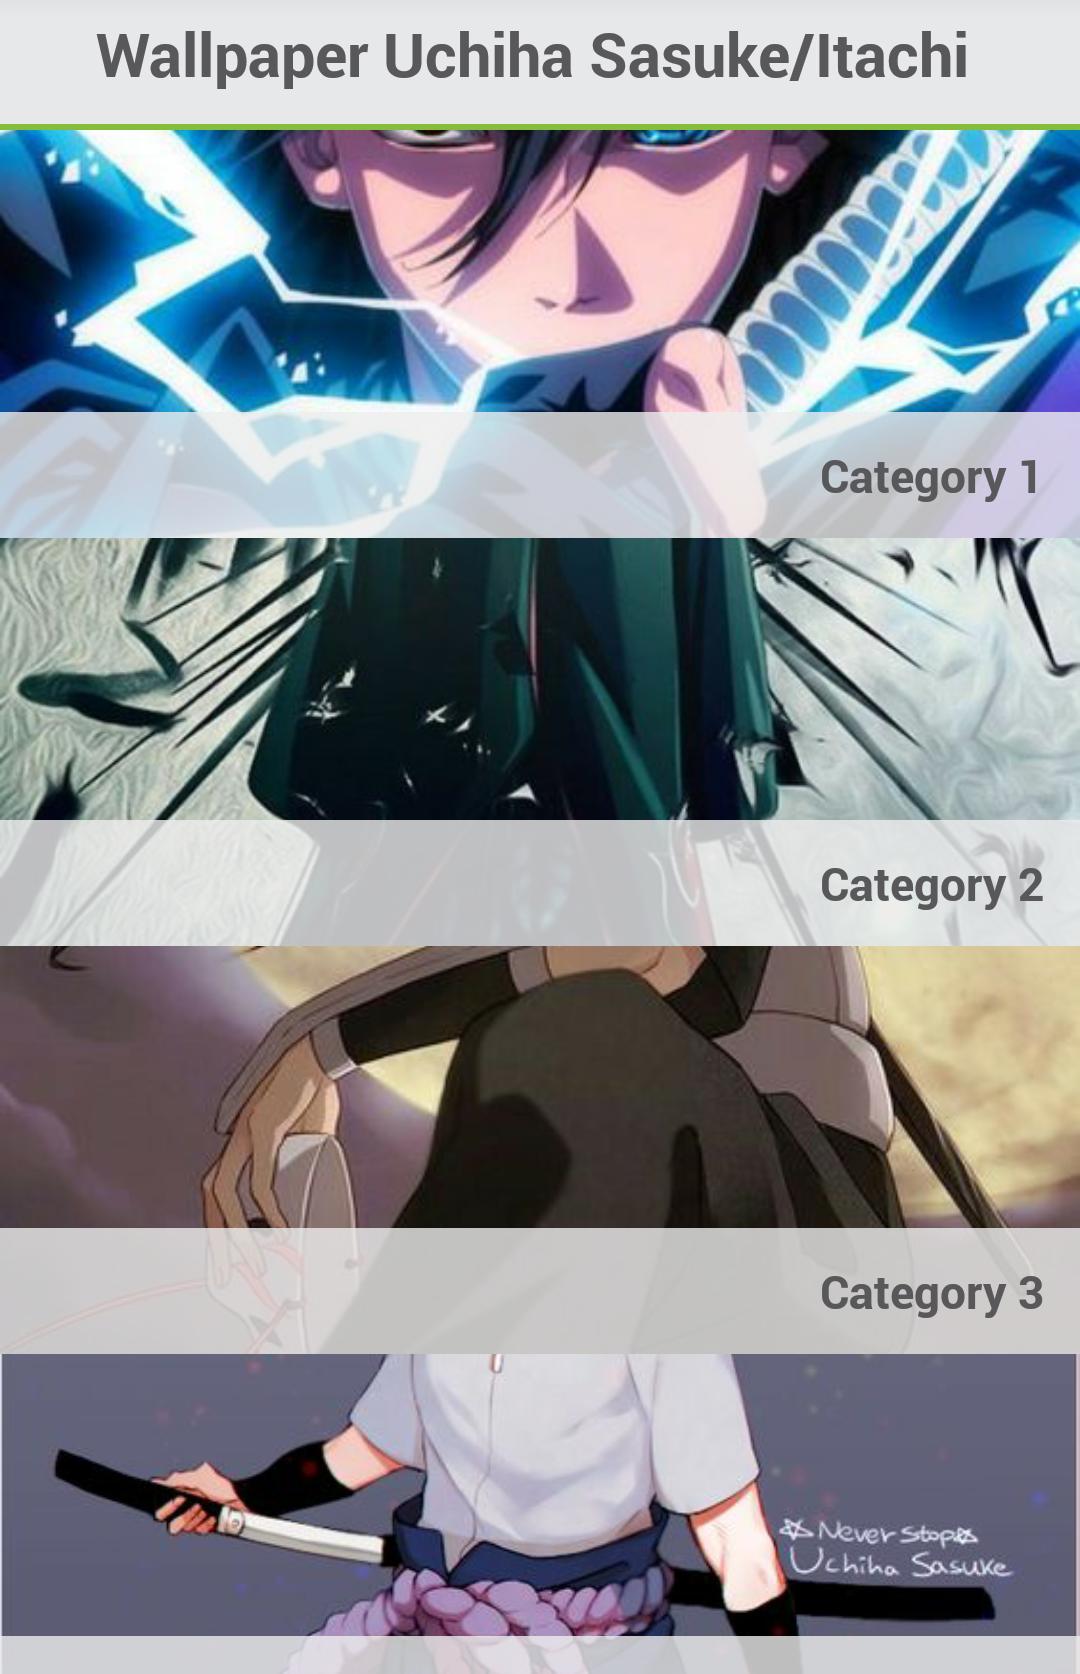 Wallpaper Uchiha Sasuke Itachi For Android Apk Download